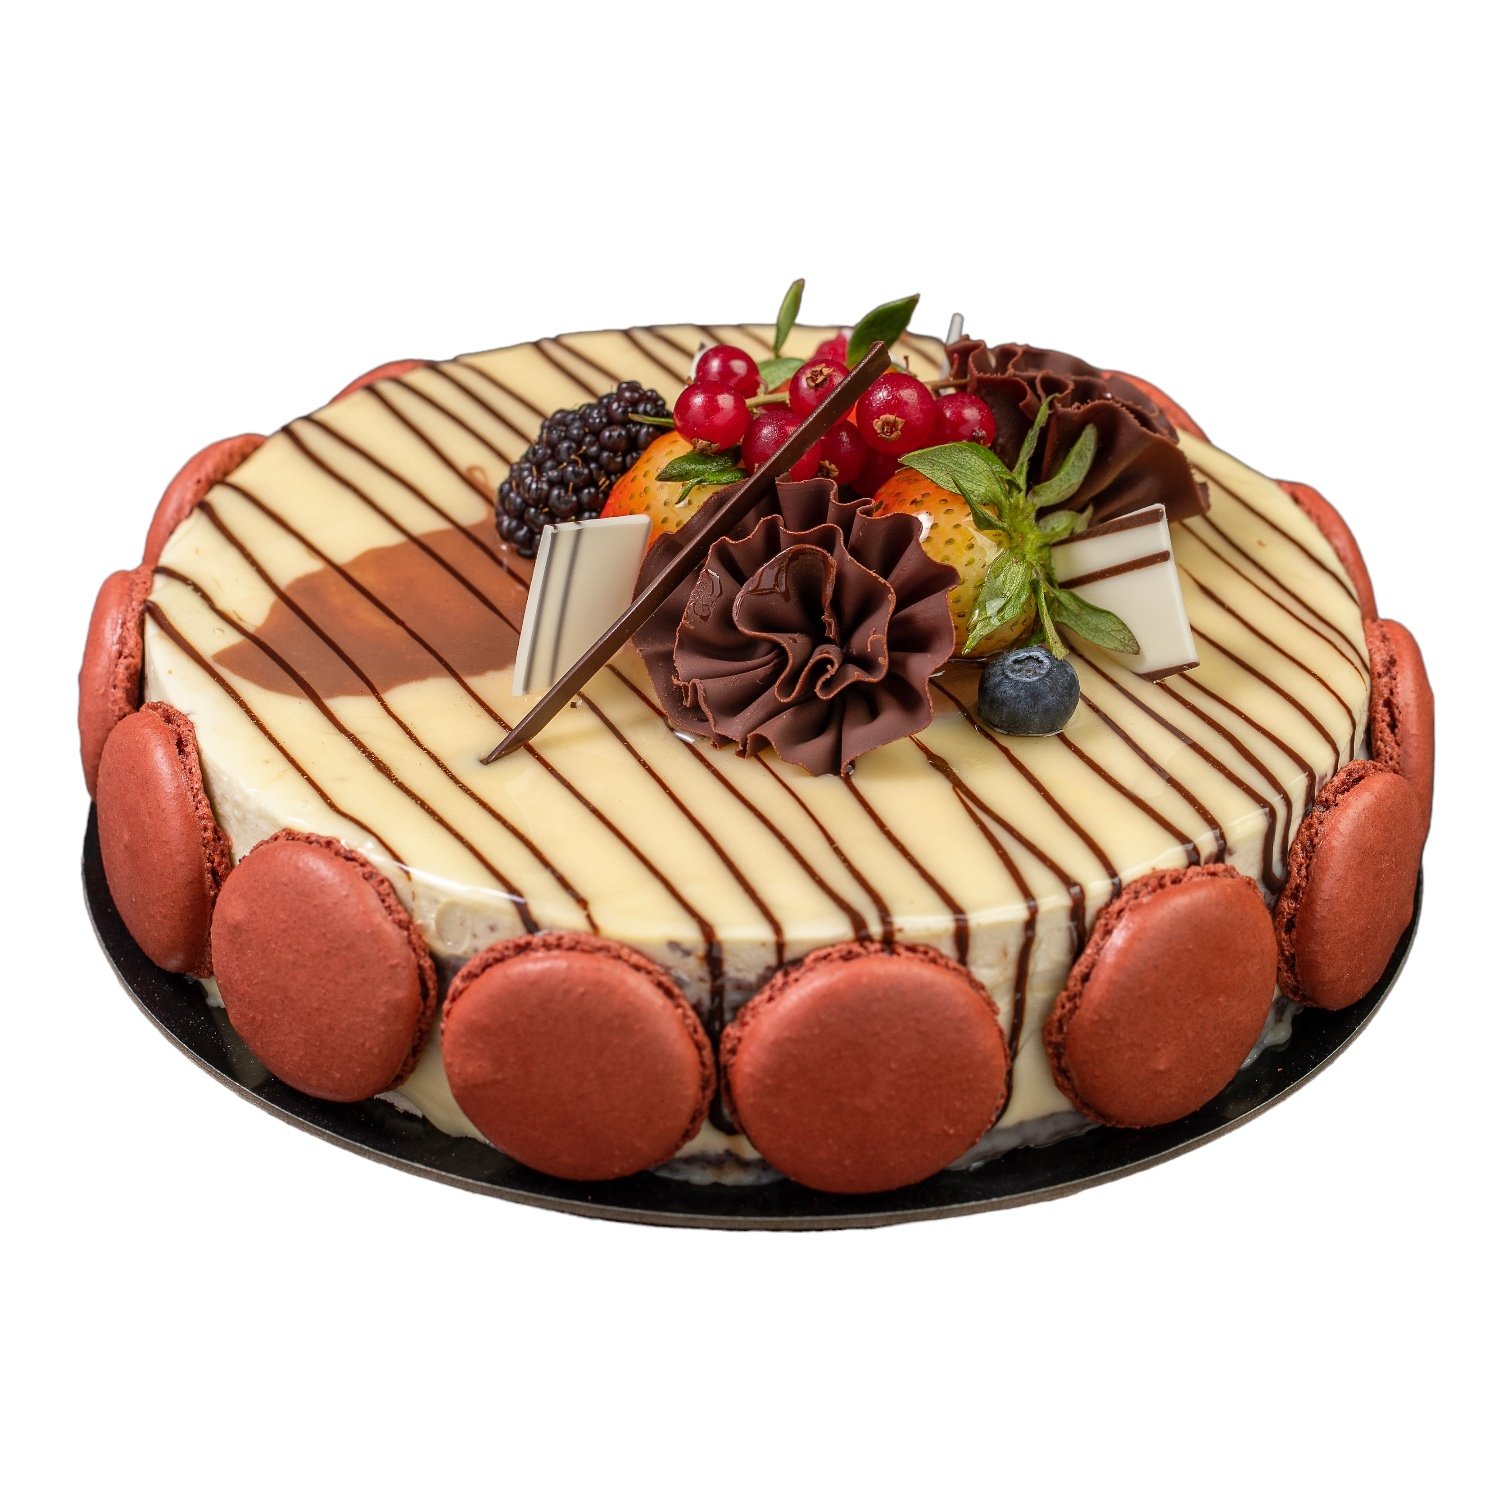 Send Cakes to Dubai UAE | Online Cake Delivery Dubai UAE | IGP